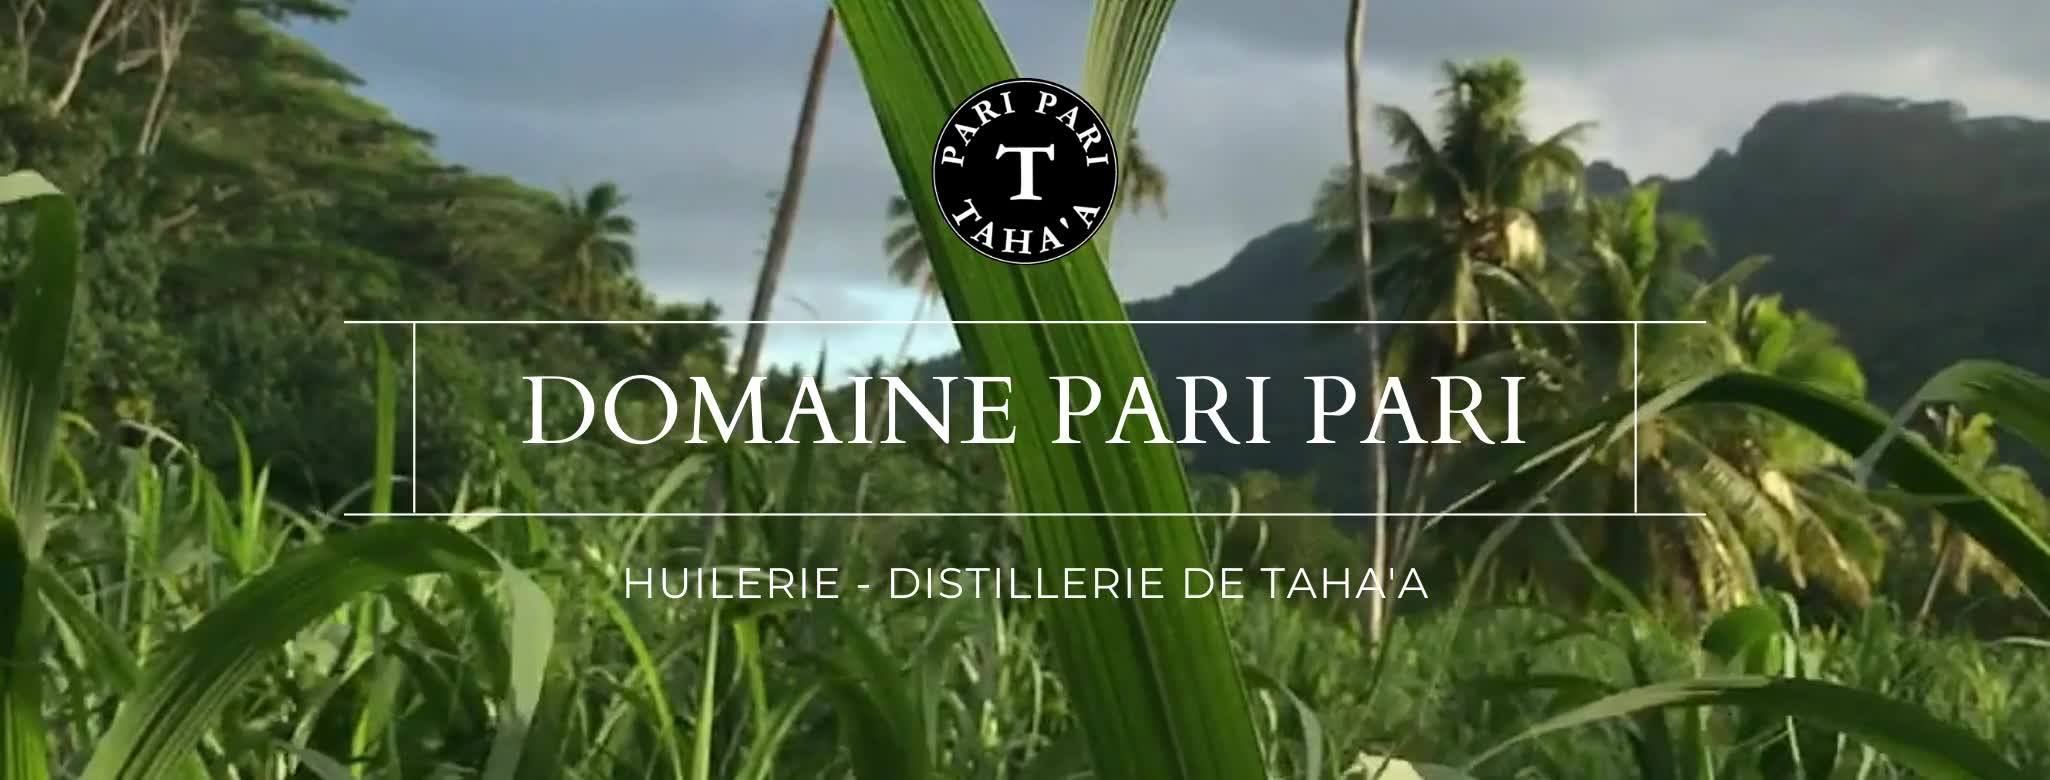 https://tahititourisme.ch/wp-content/uploads/2021/11/Domaine-pari-pari.jpg